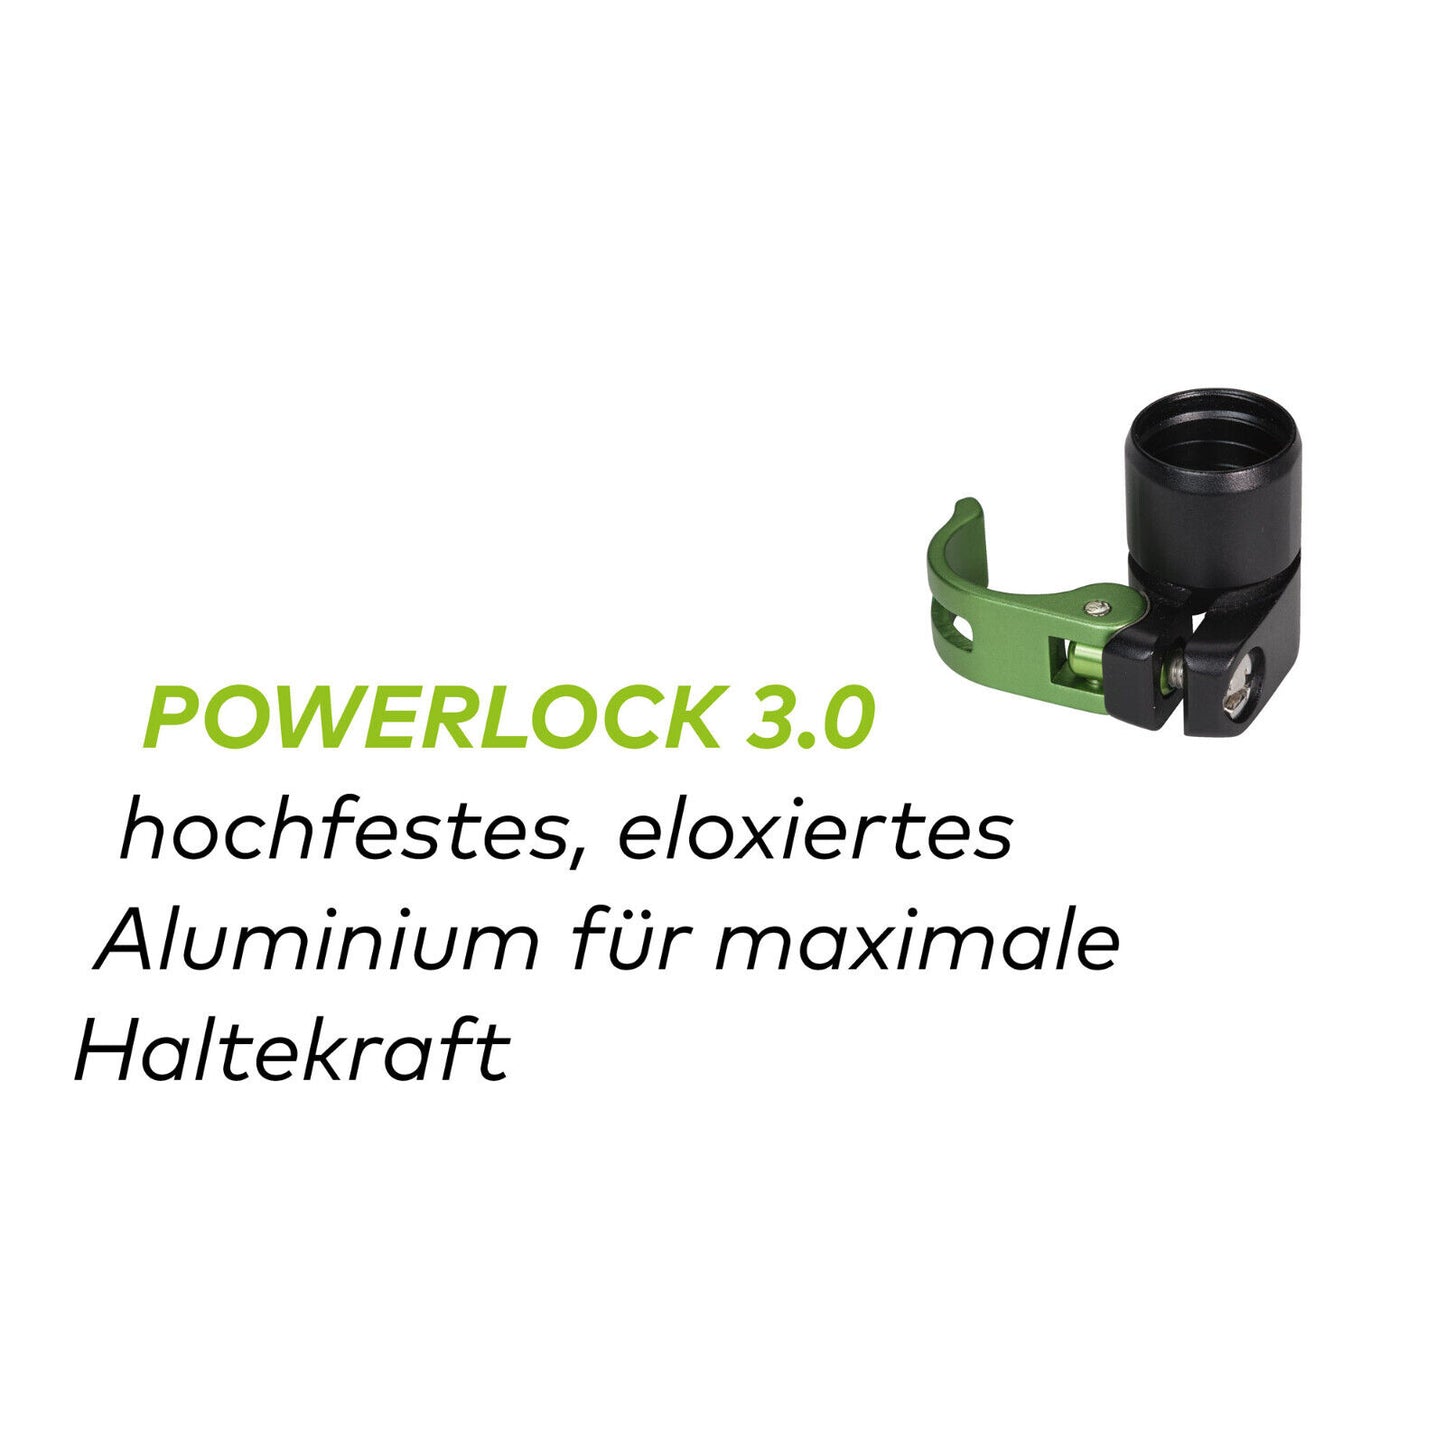 Komperdell Nordic Walking Stöcke - Sarma Powerlock pure black - Vario 105-125cm